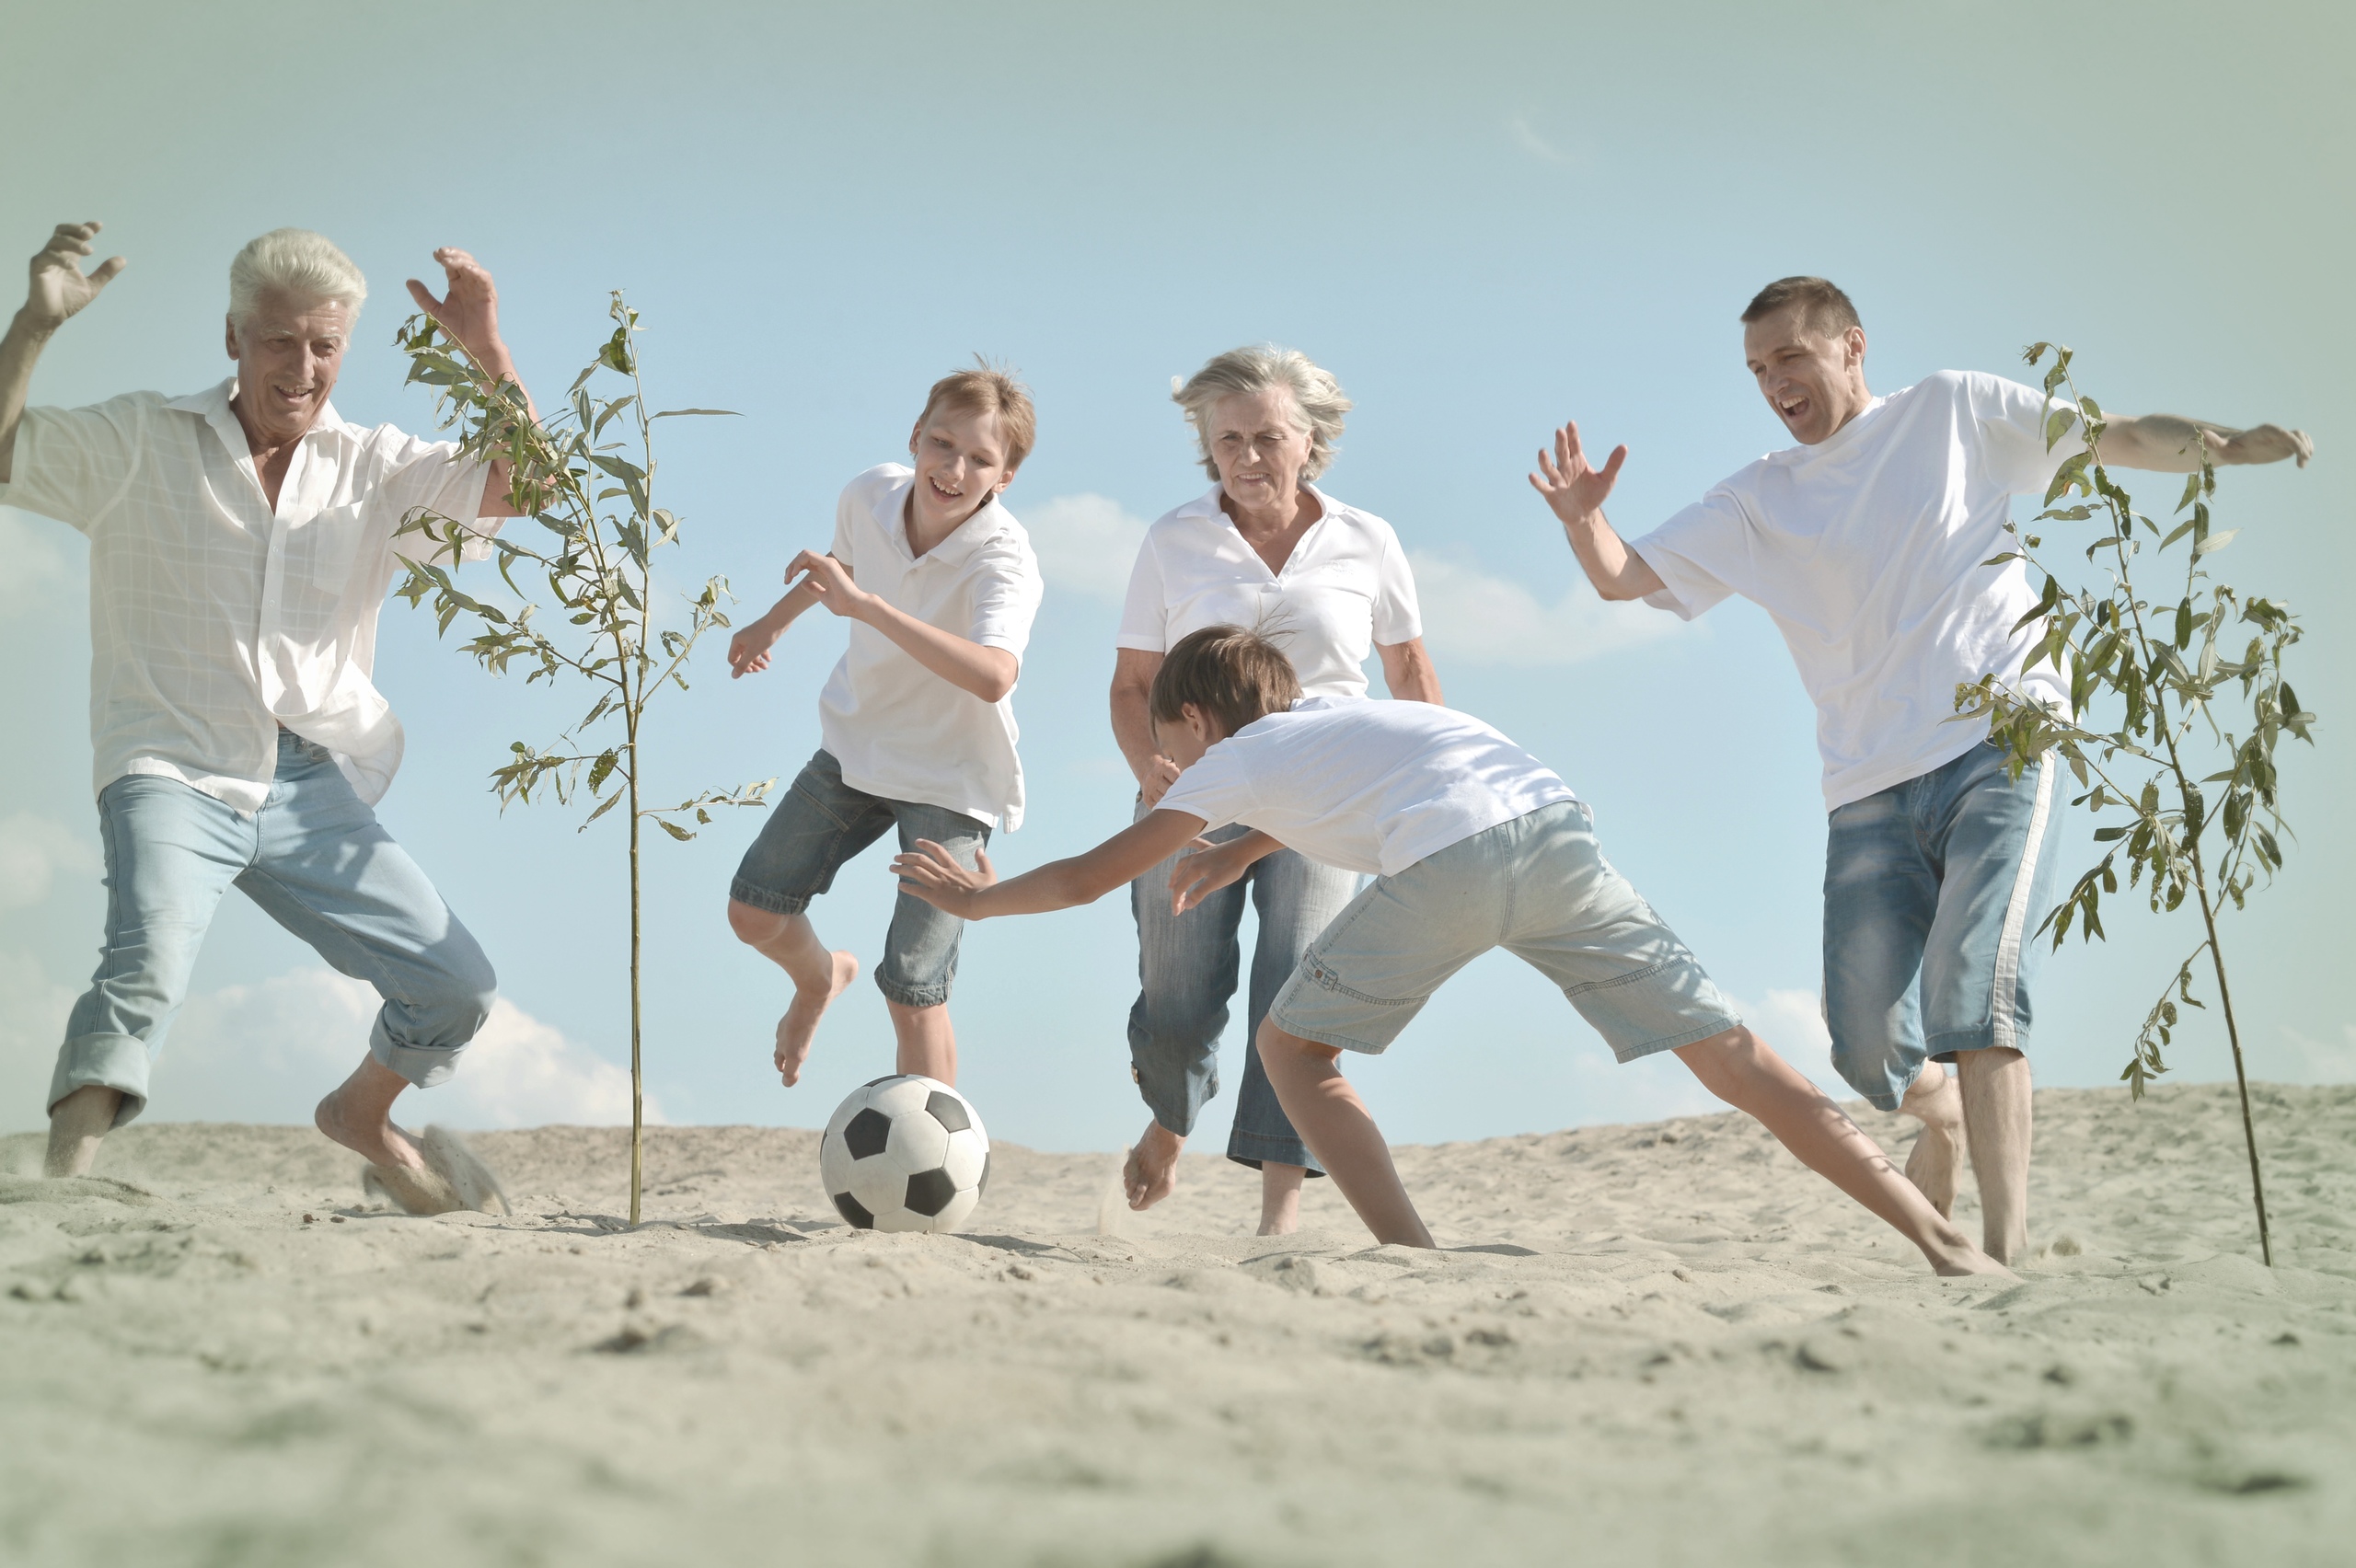 Do you enjoy playing sports. Семья на футболе. Волейбол семья. Семья играет в футбол. Футбола счастливая семья.